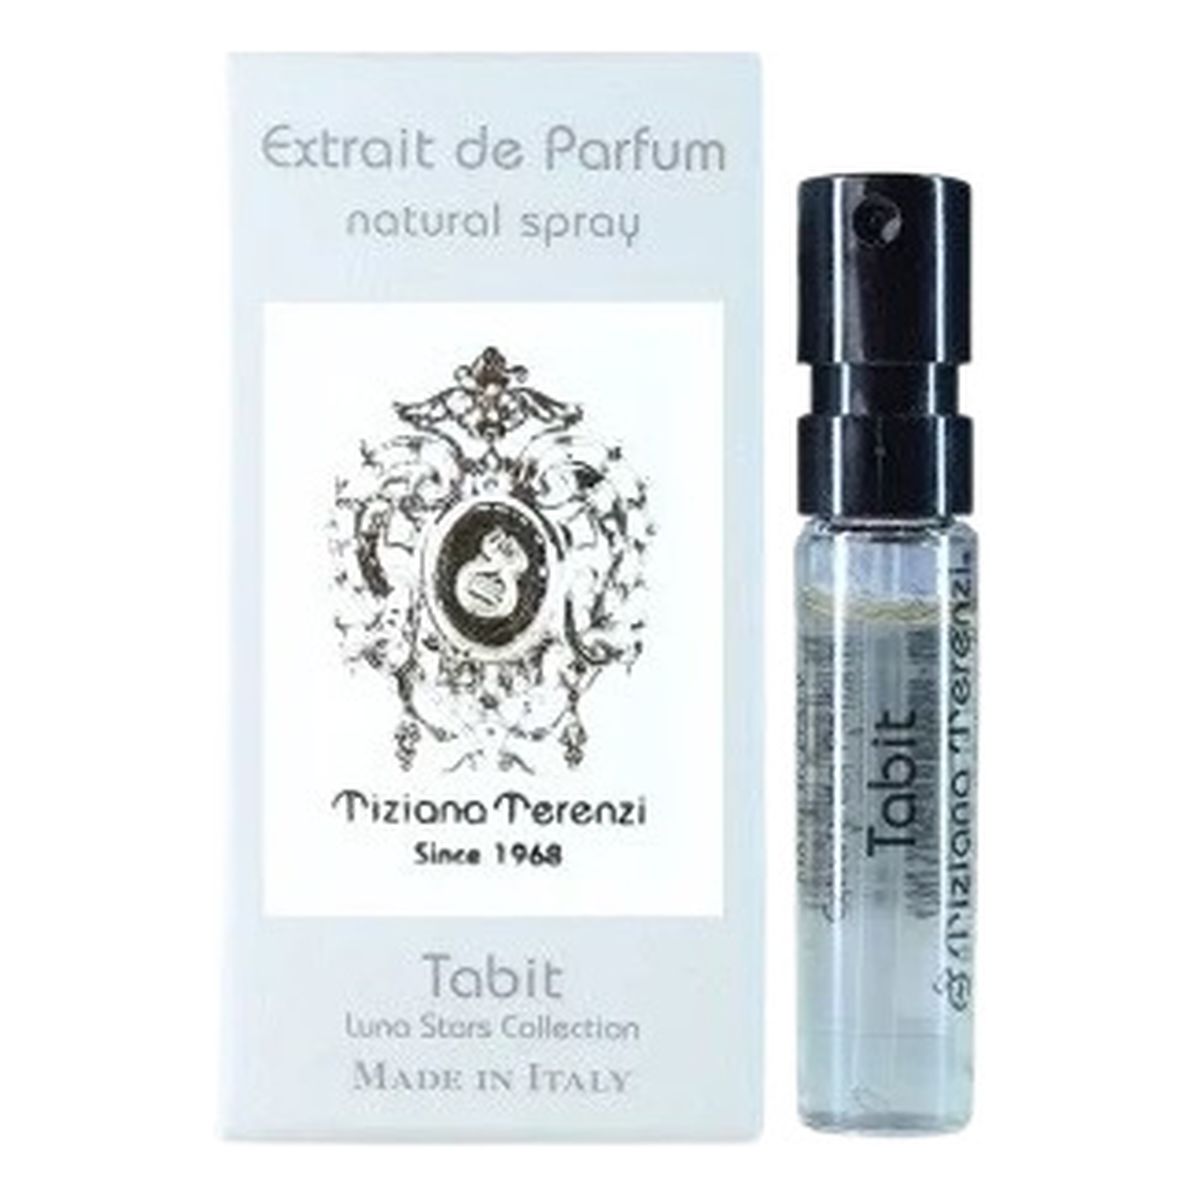 Tiziana Terenzi Tabit ekstrakt perfum spray próbka 1.5ml